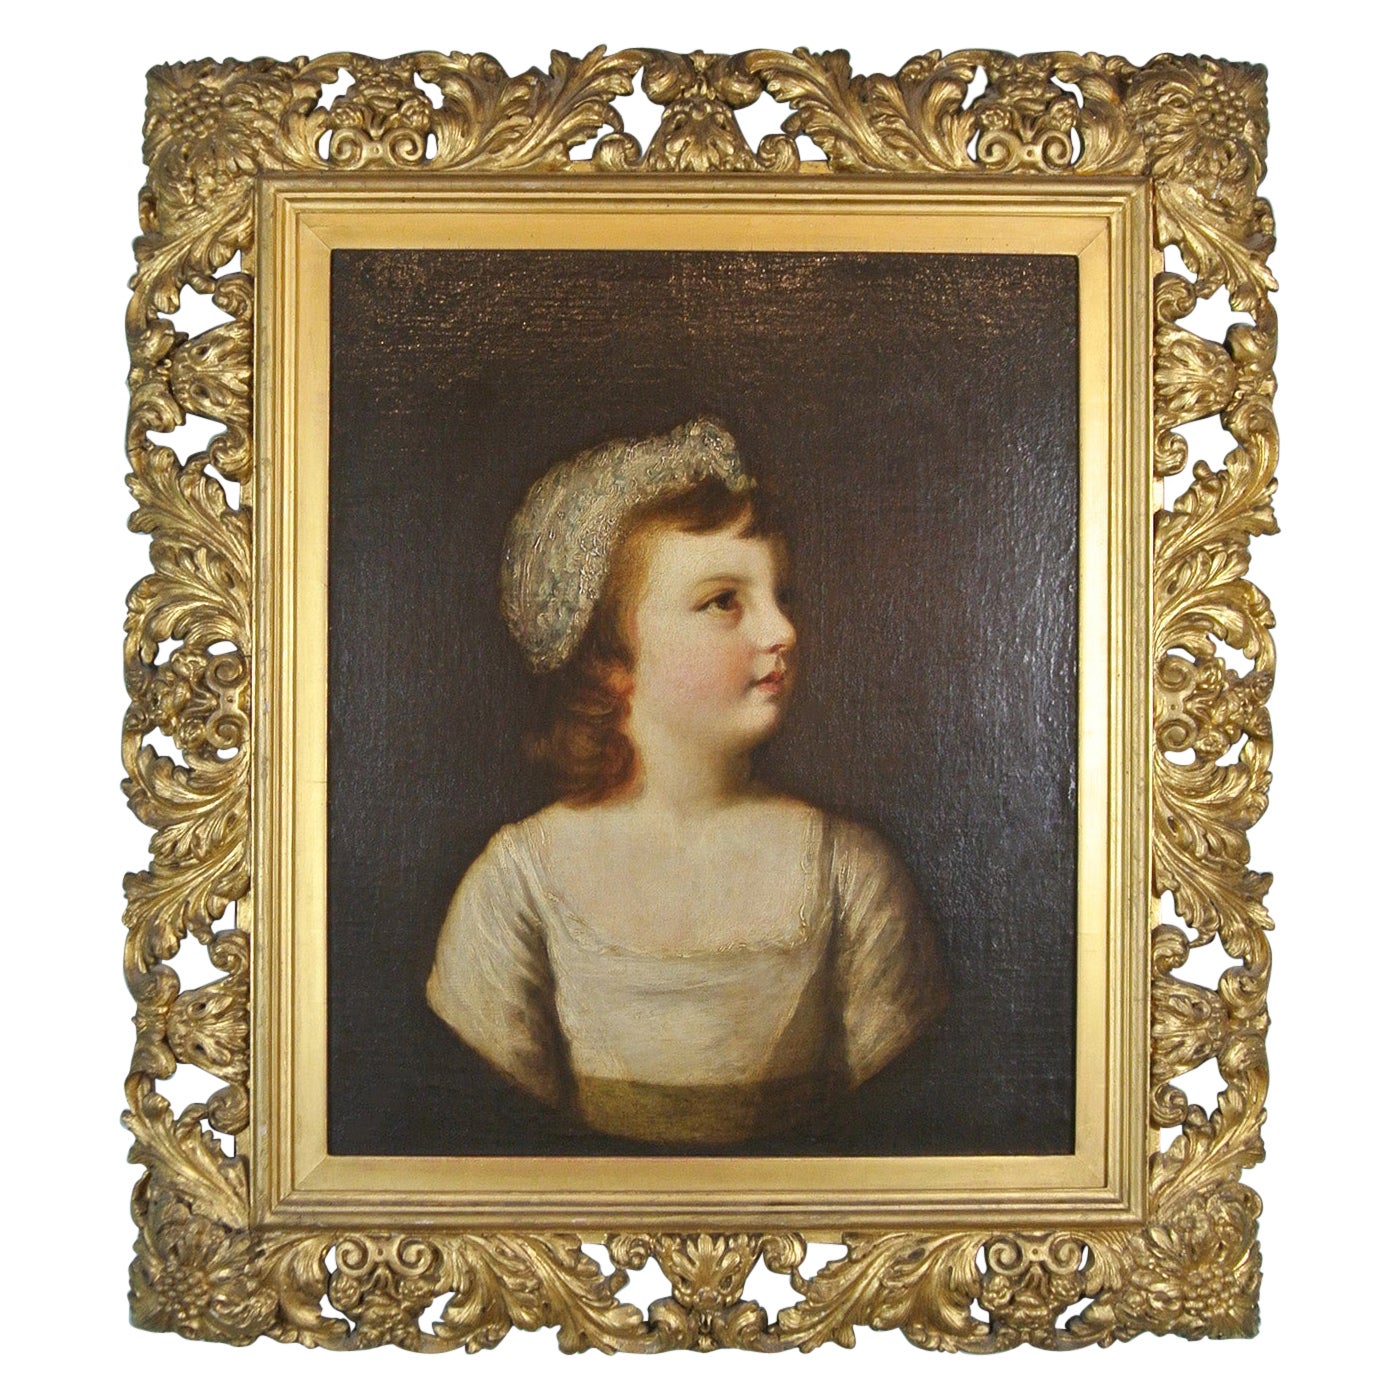 École anglaise du XVIIIe siècle, style Lady Catherine Mary dans son enfance en vente